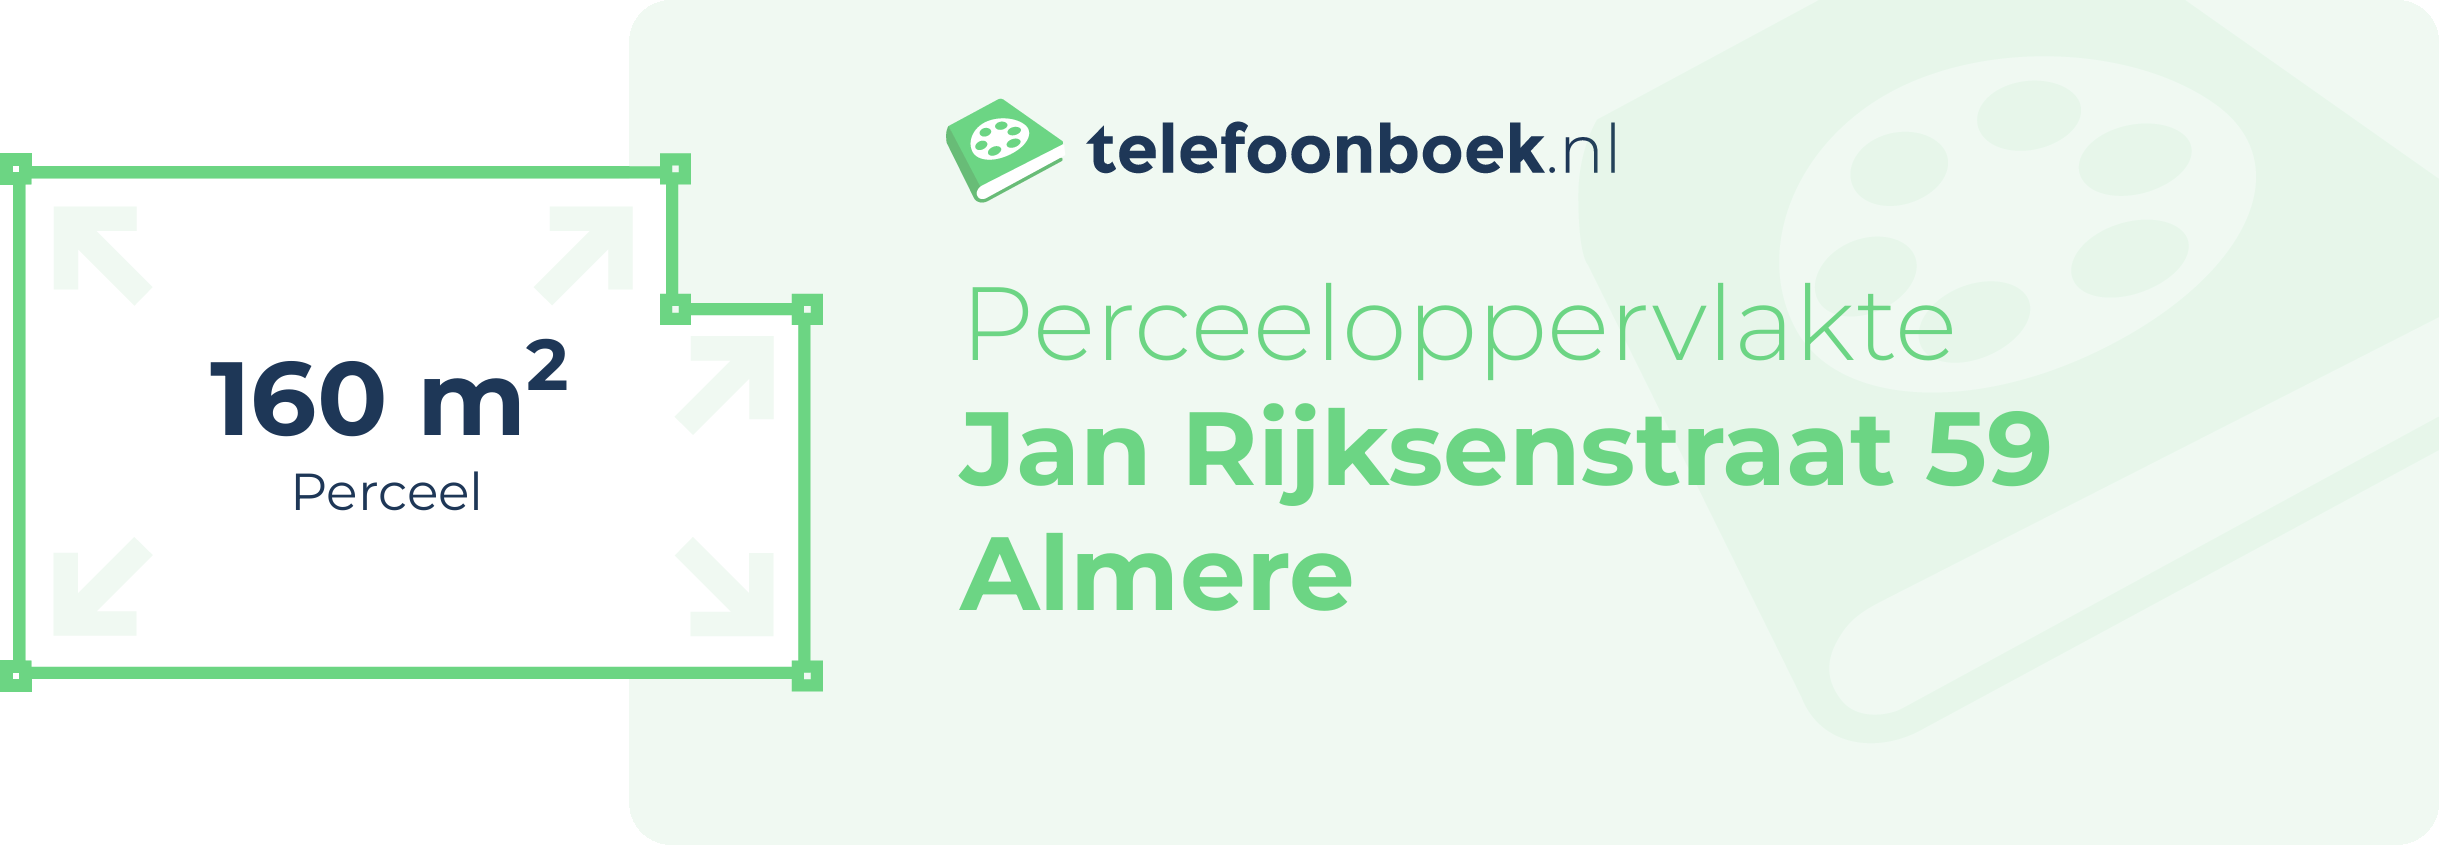 Perceeloppervlakte Jan Rijksenstraat 59 Almere